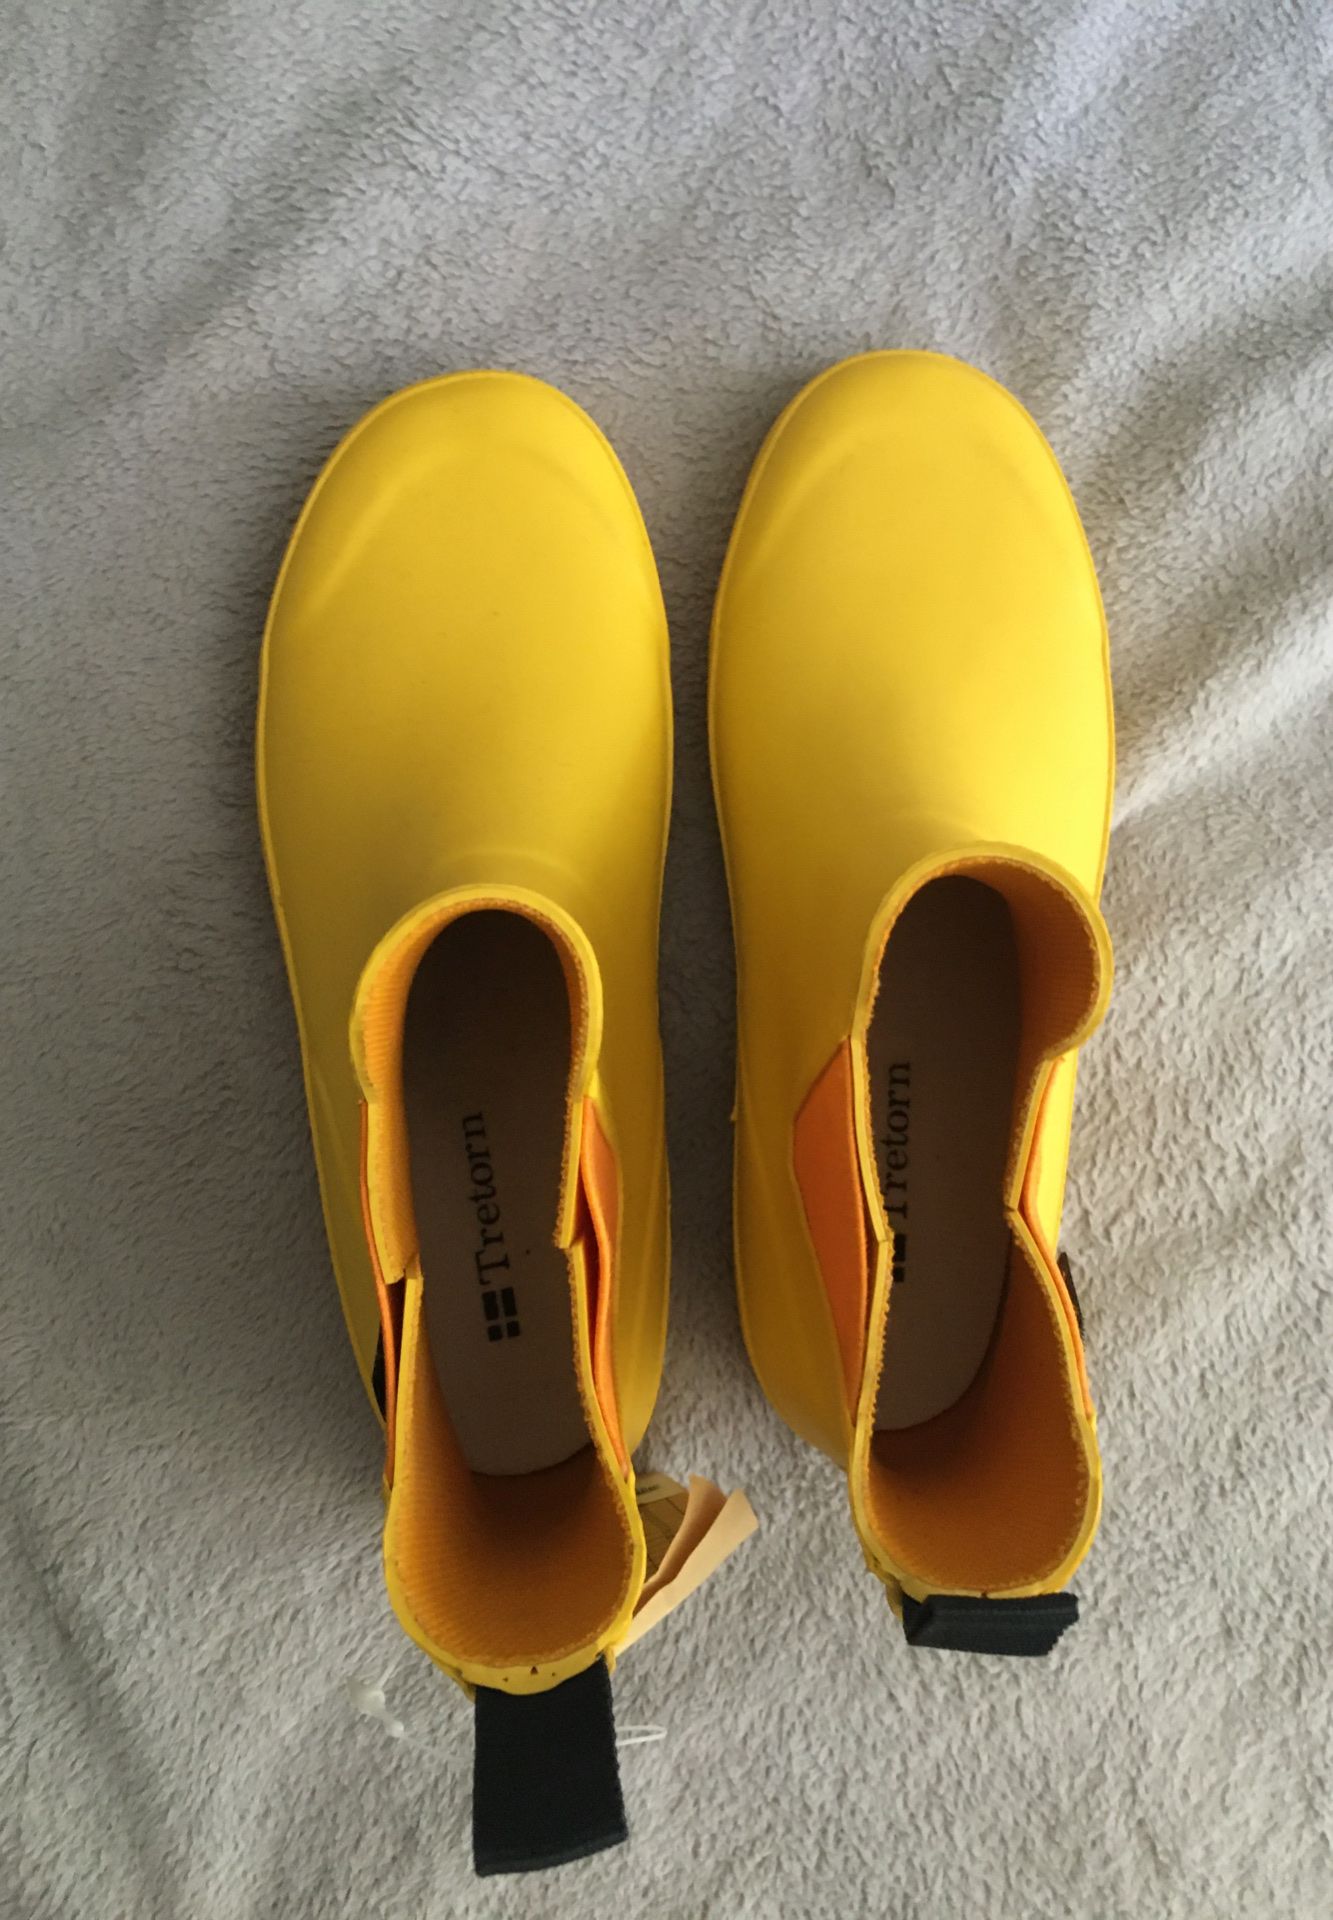 Yellow Tretorn Rain boots